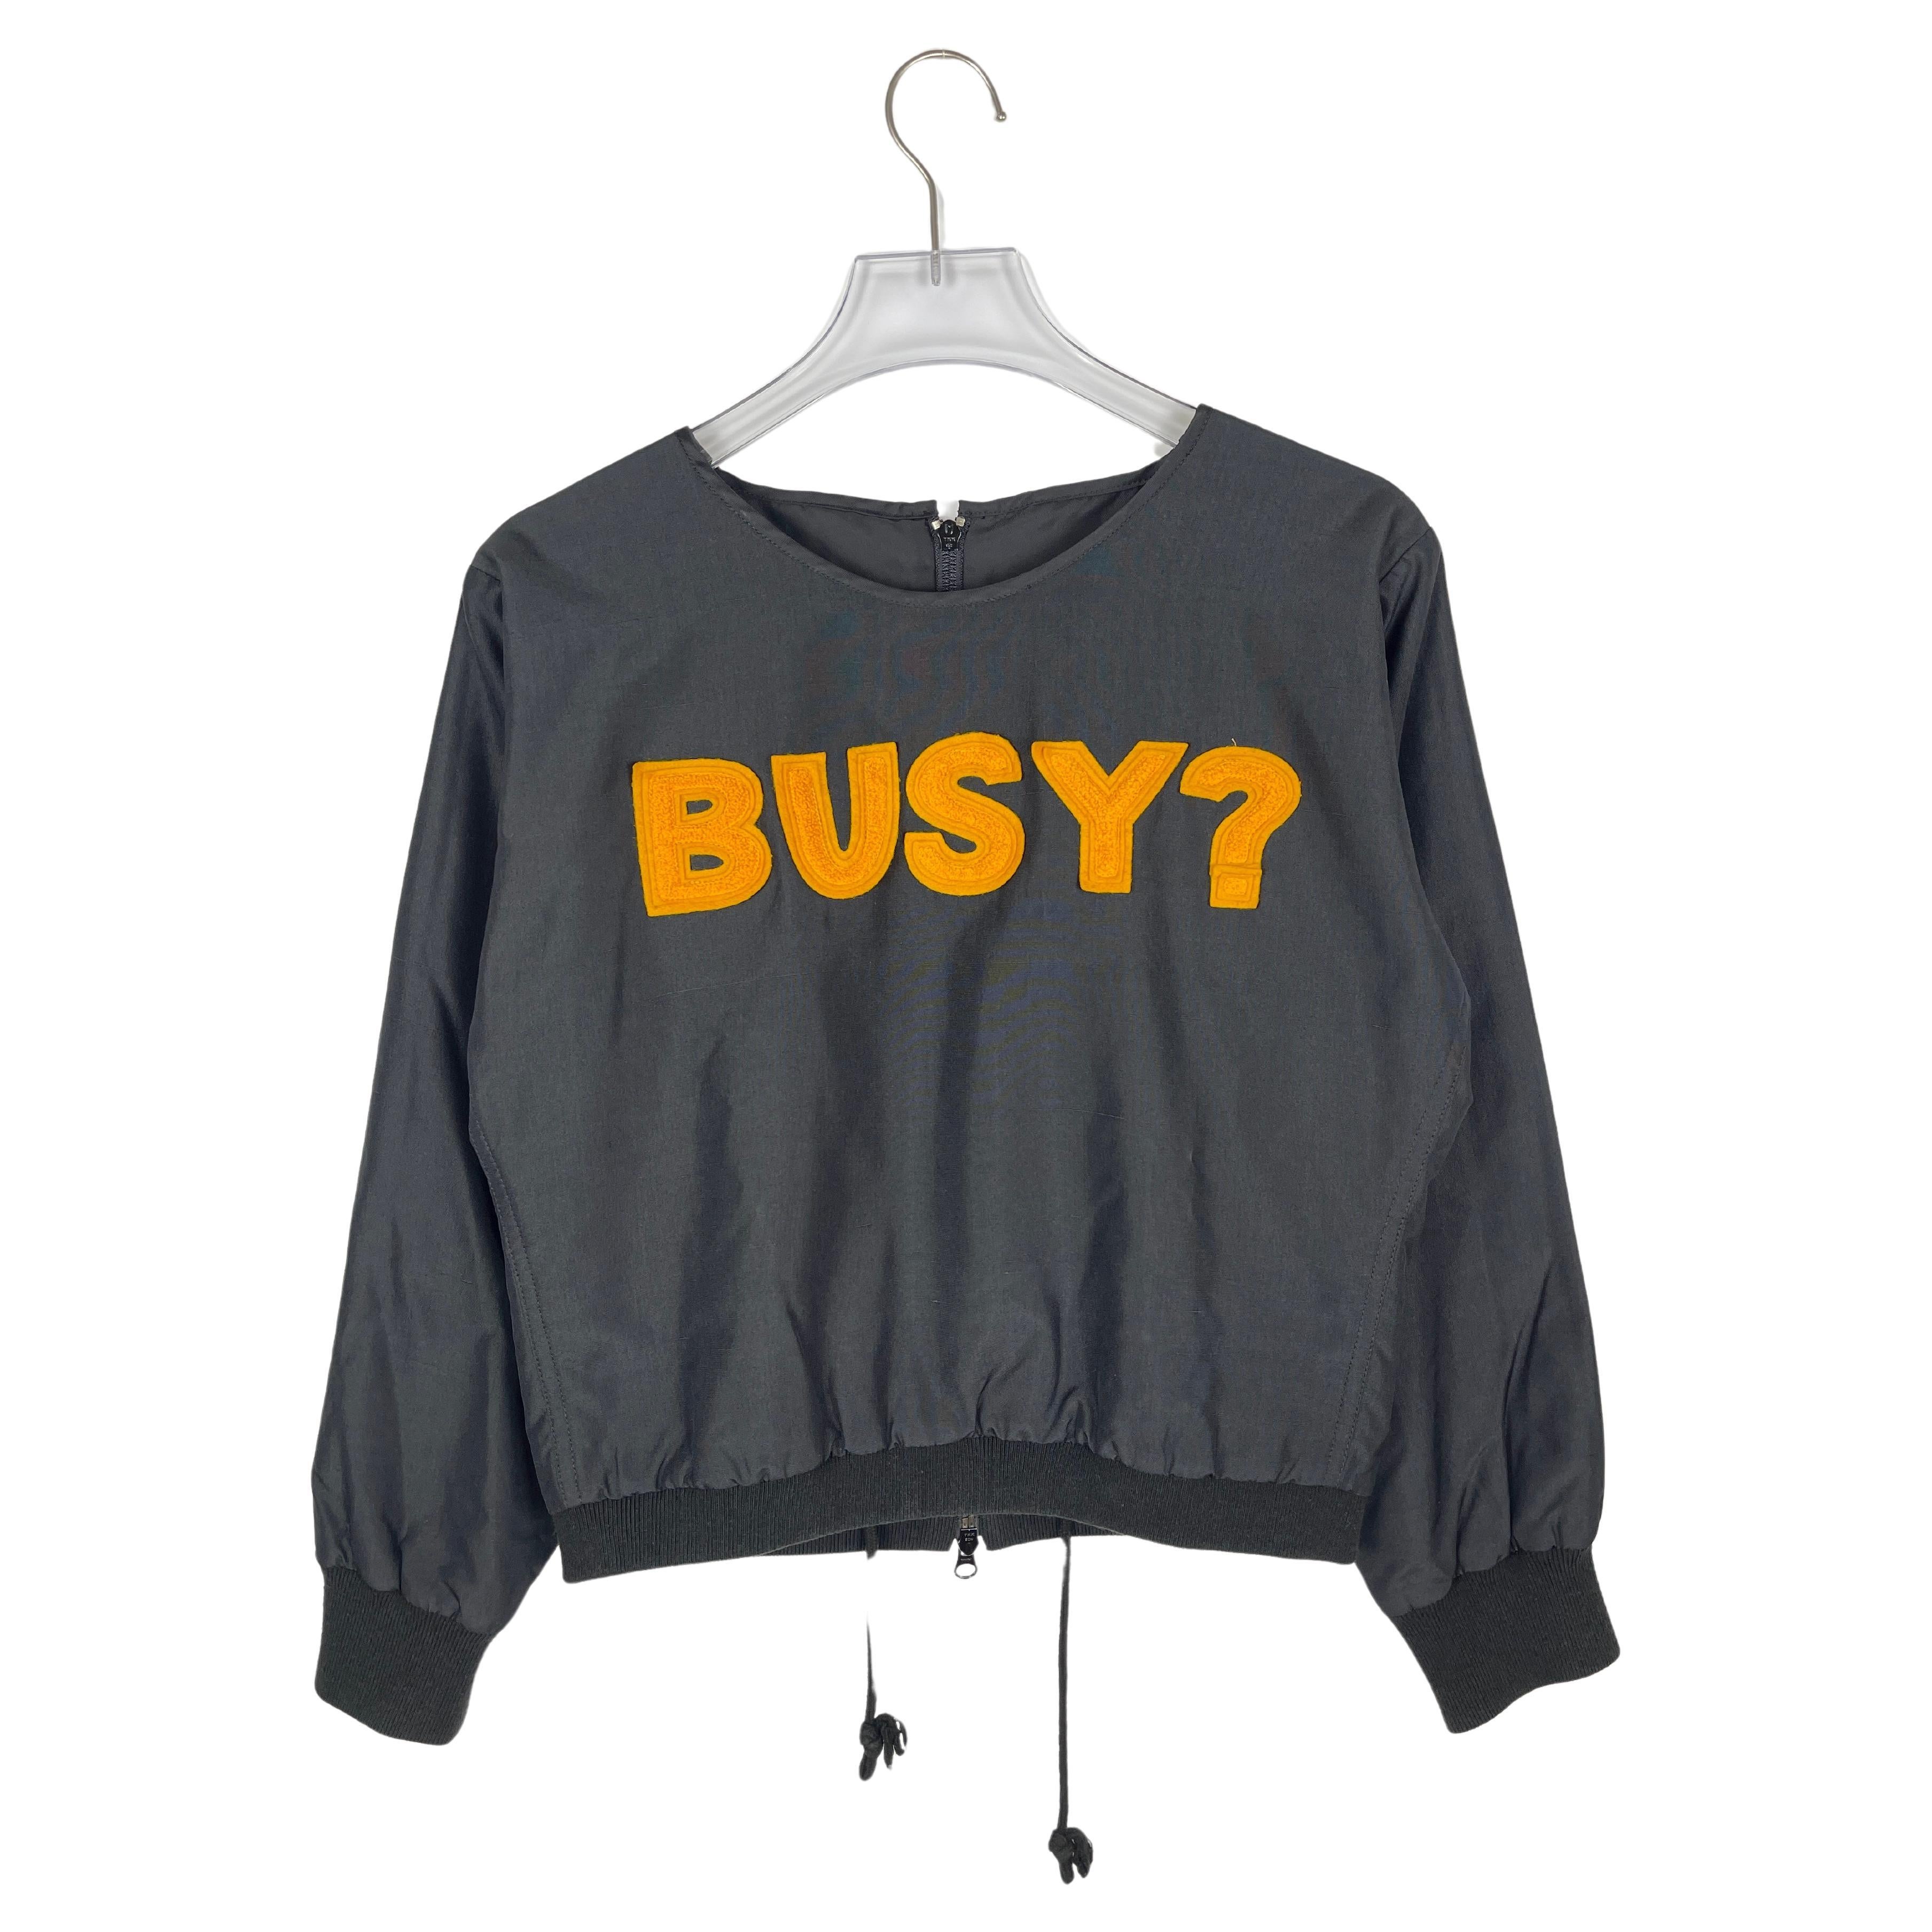 Yohji Yamamoto A/W2002 "Busy" Zip-Up Shirt For Sale